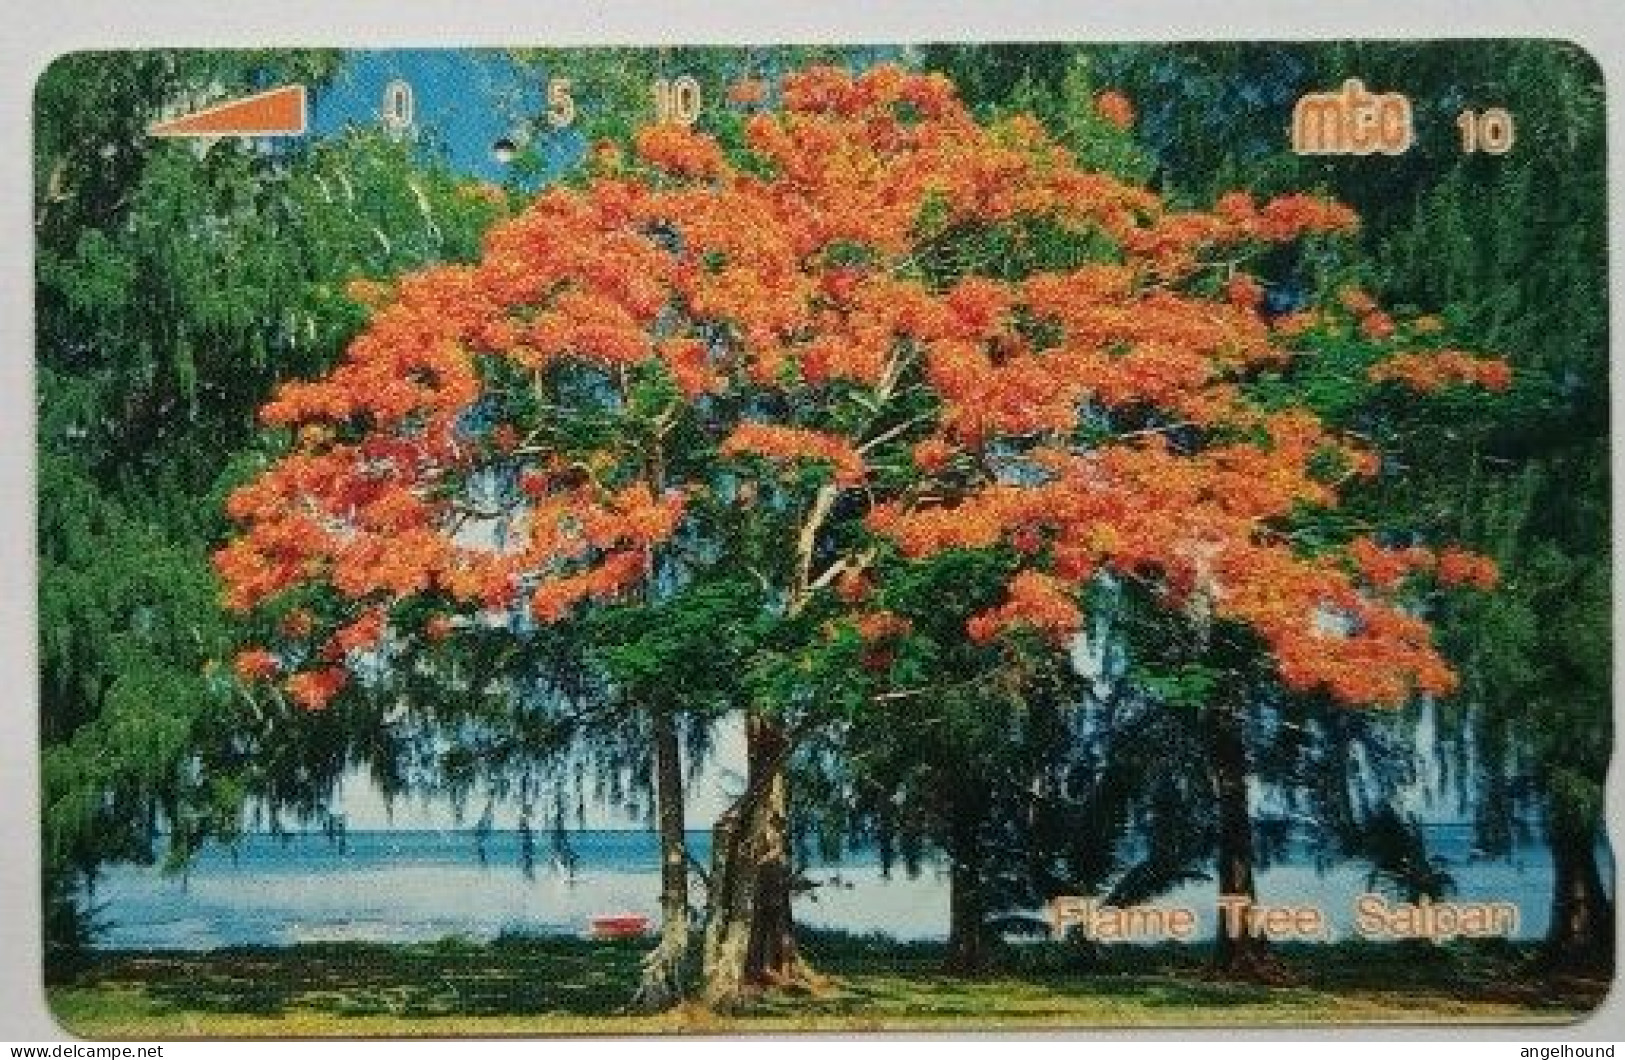 Northerm Marianas MT Card 10 - Flame Tree - Northern Mariana Islands